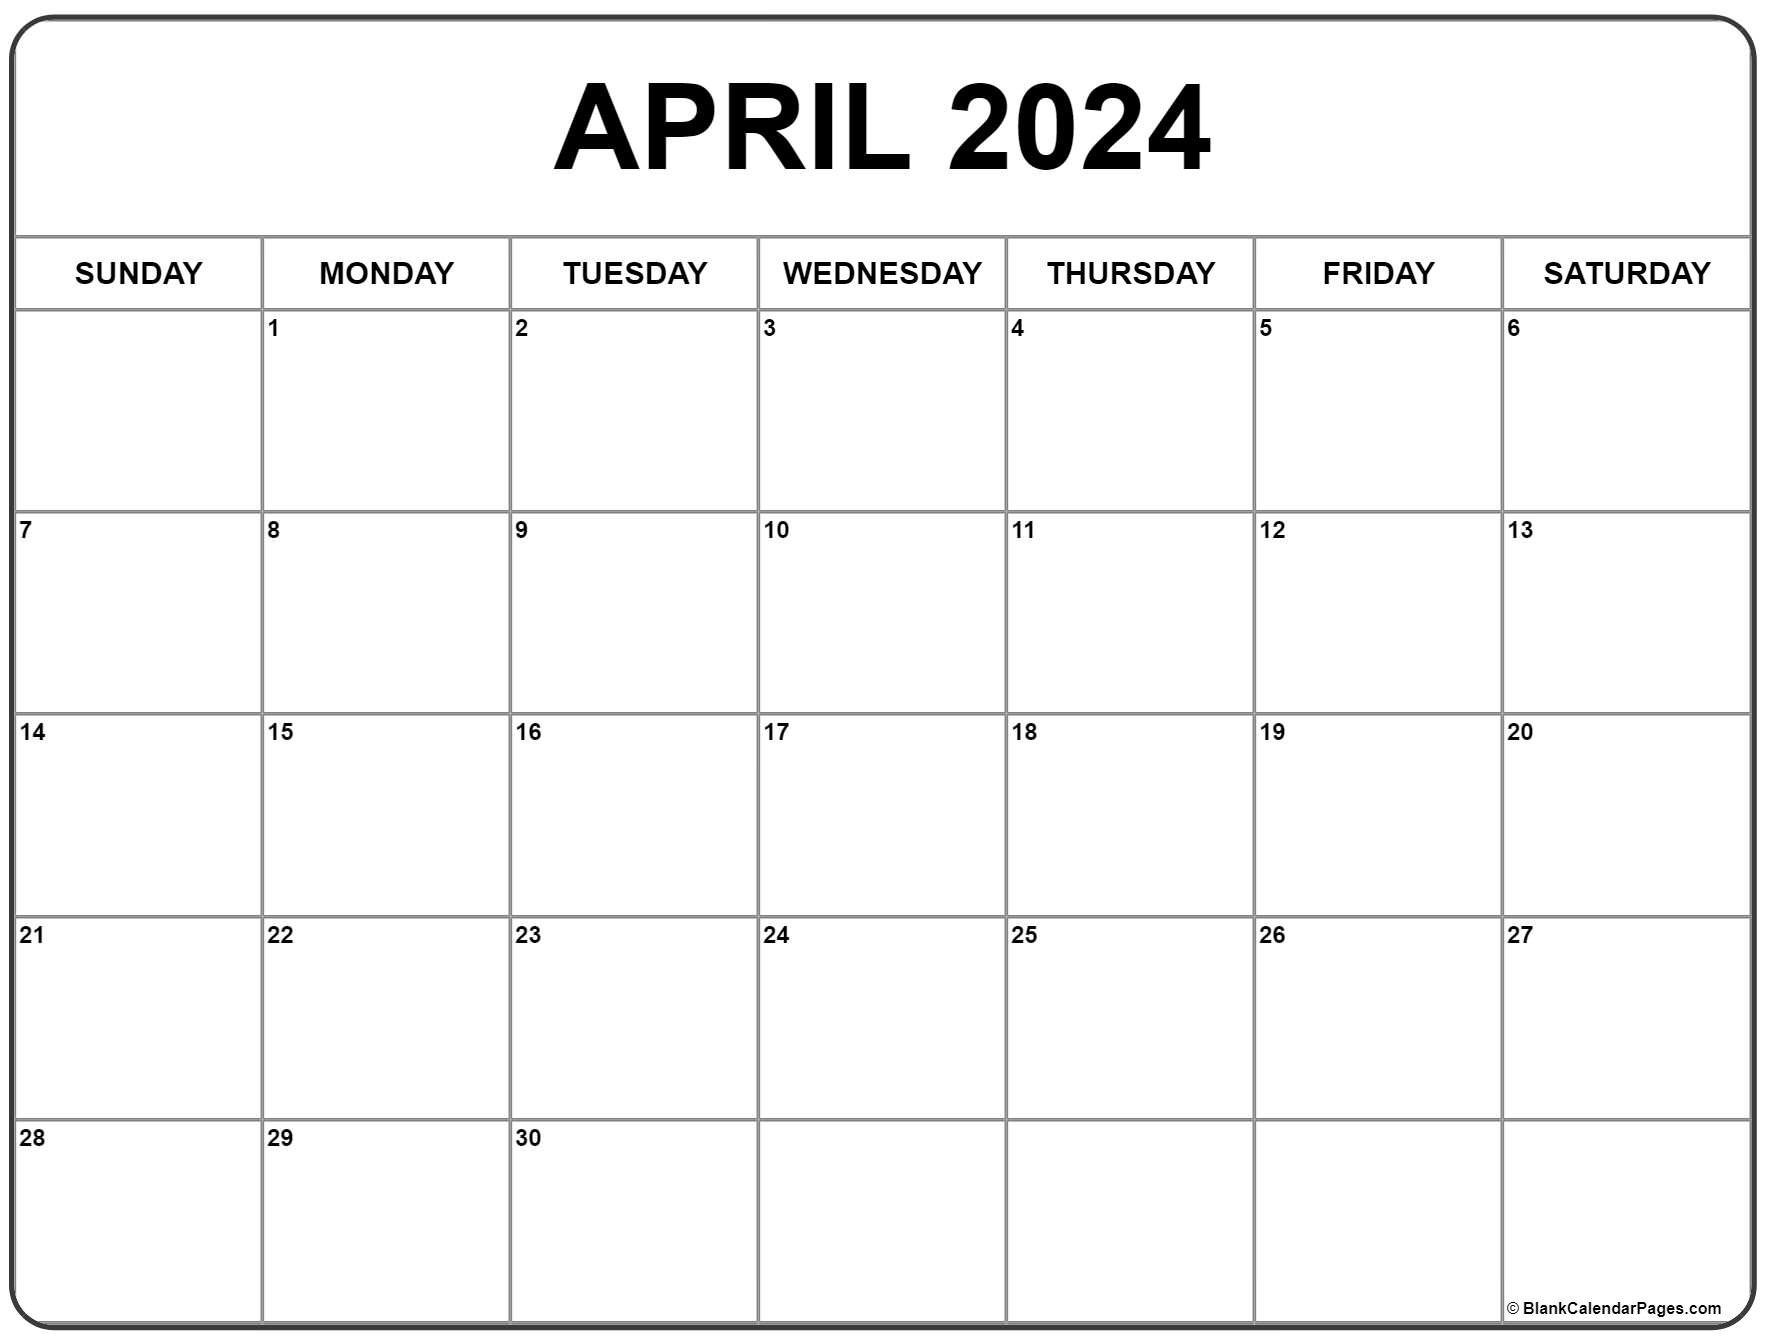 April 2024 Calendar | Free Printable Calendar for Printable April 2024 Calendar